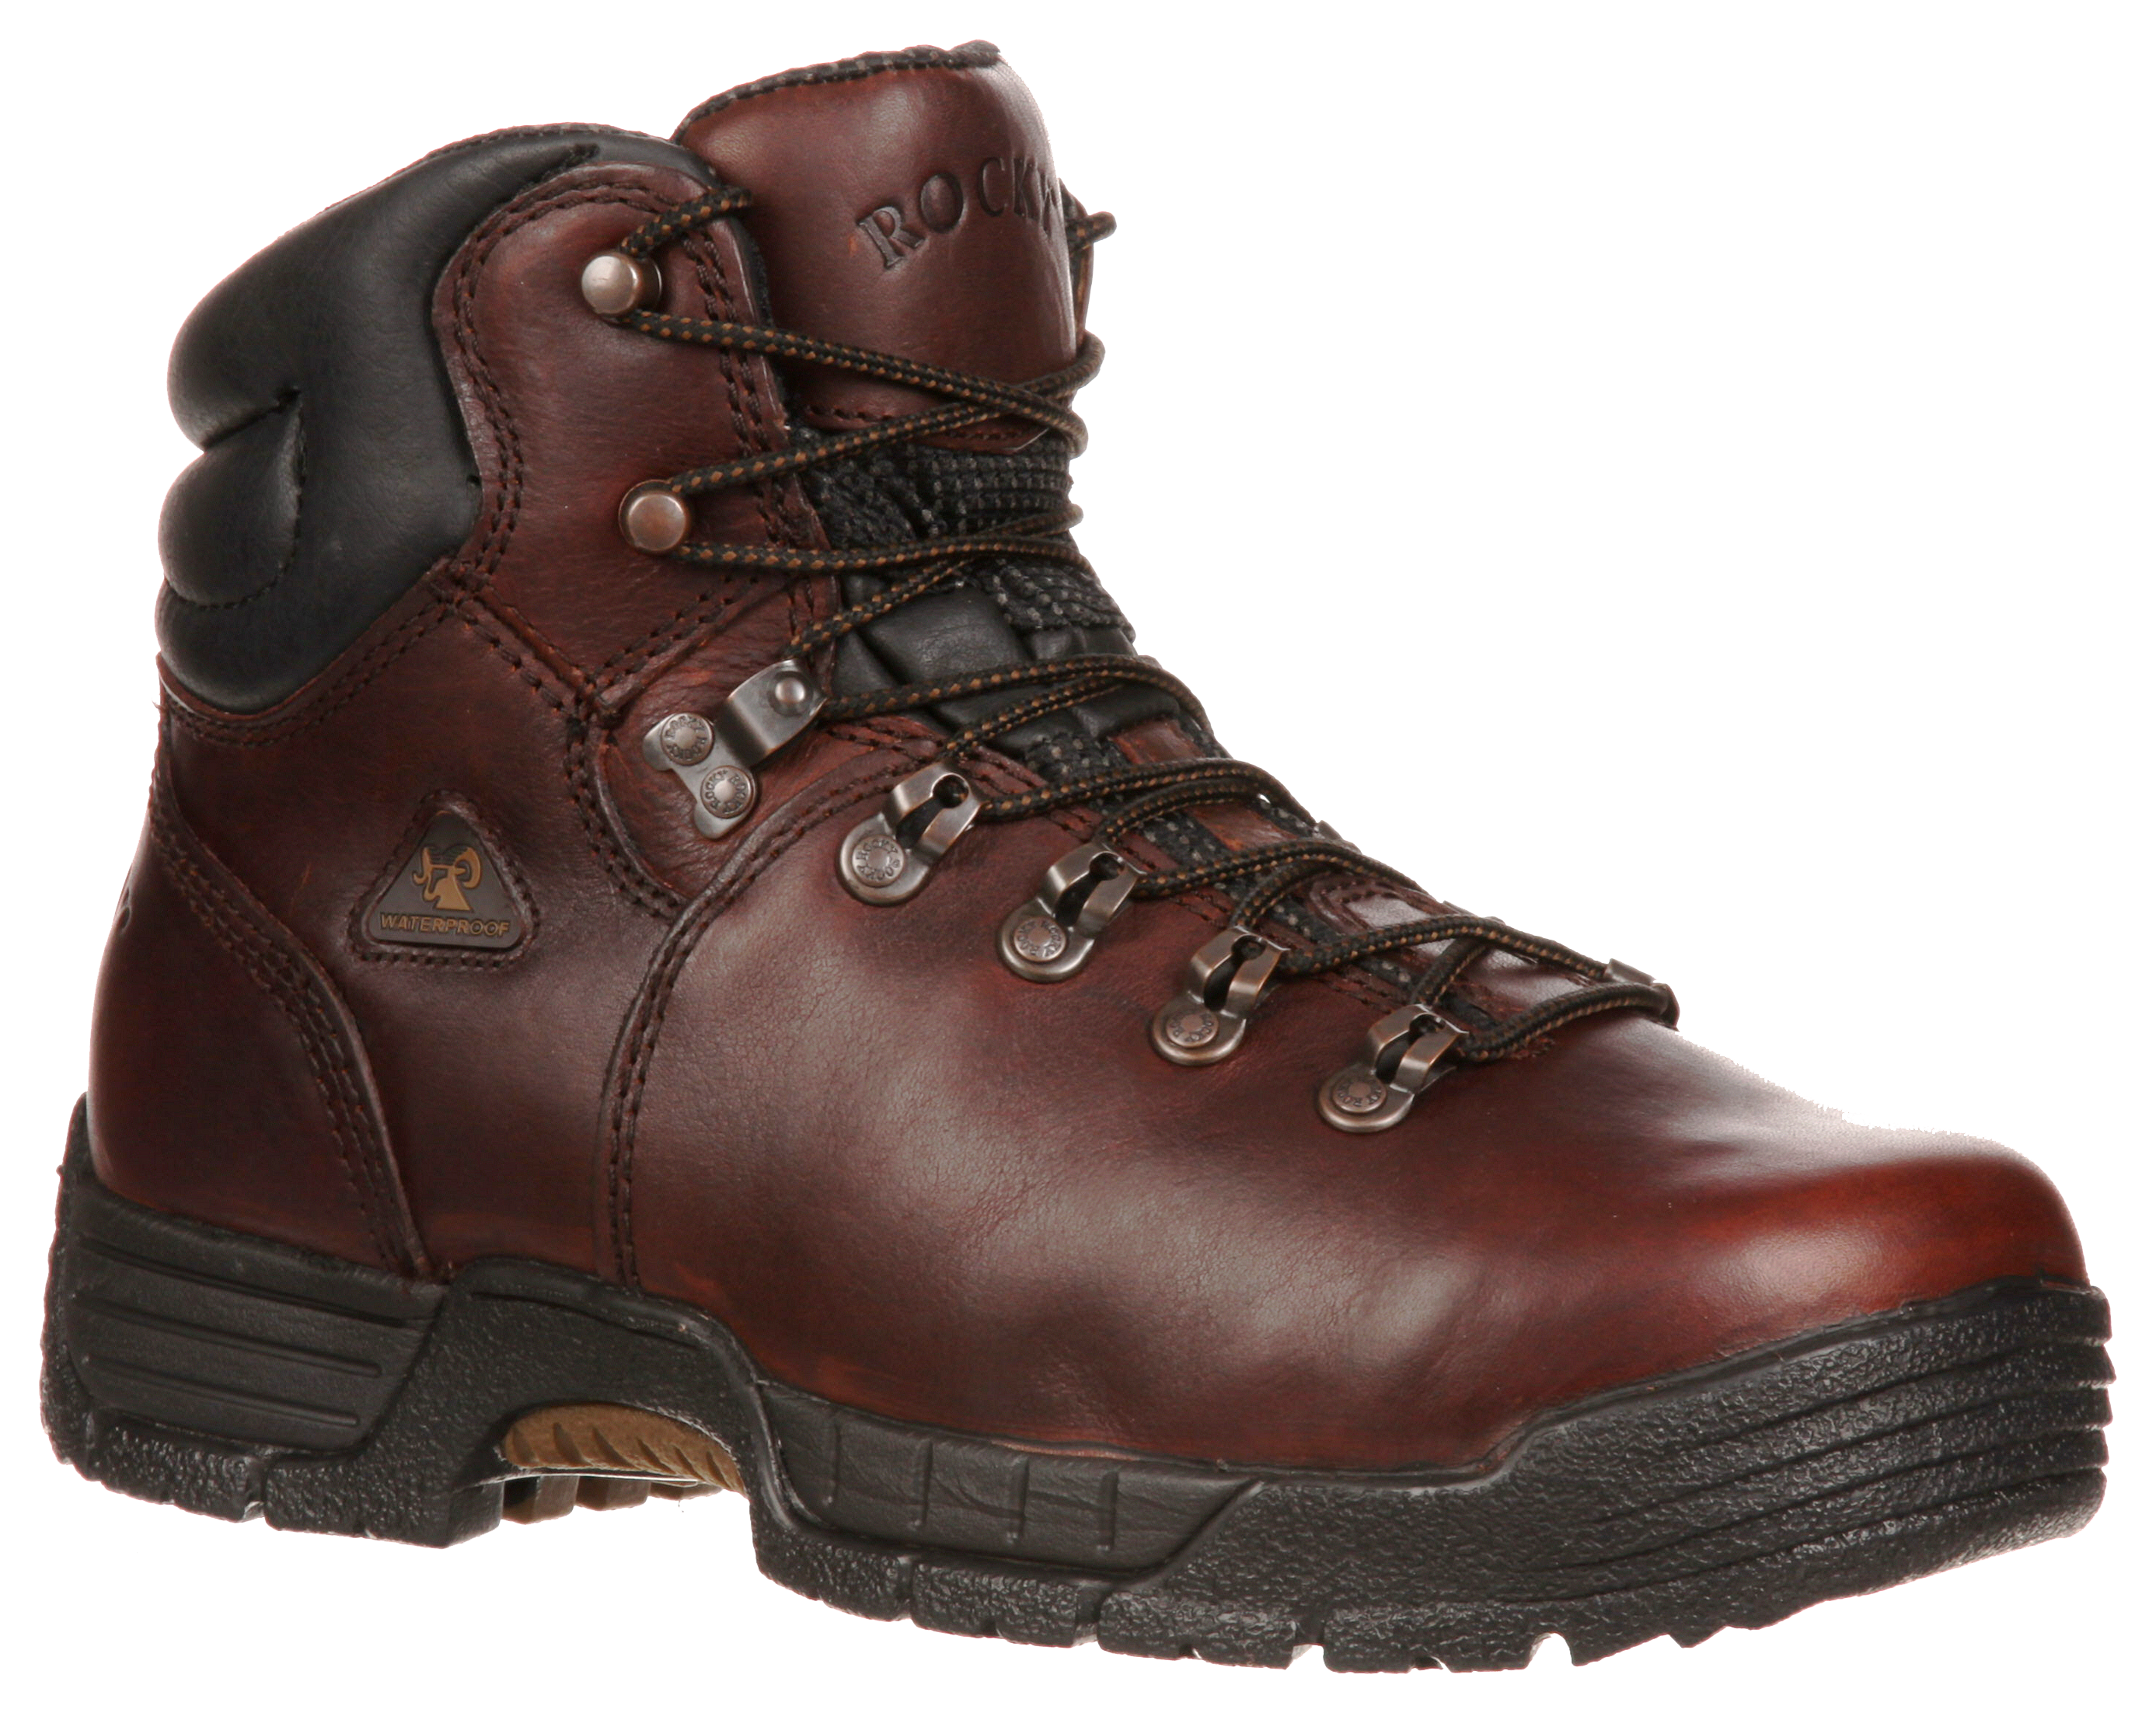 ROCKY MobiLite Waterproof Steel Toe Work Boots for Men - Brown - 8.5 M